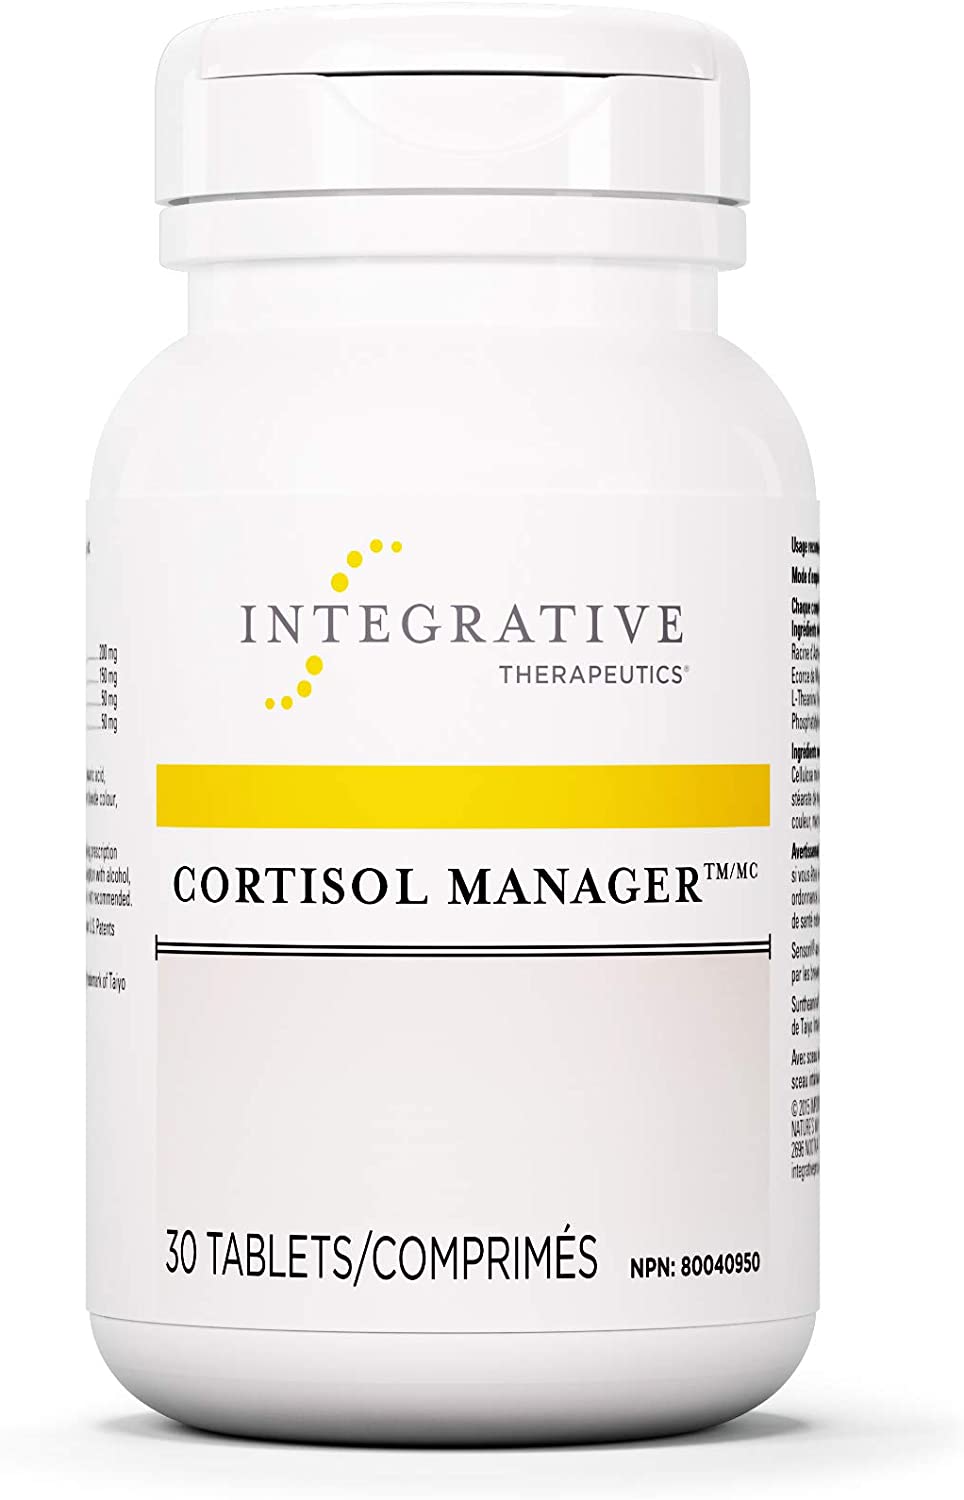 Cortisol manager - Intergrative therapeutics